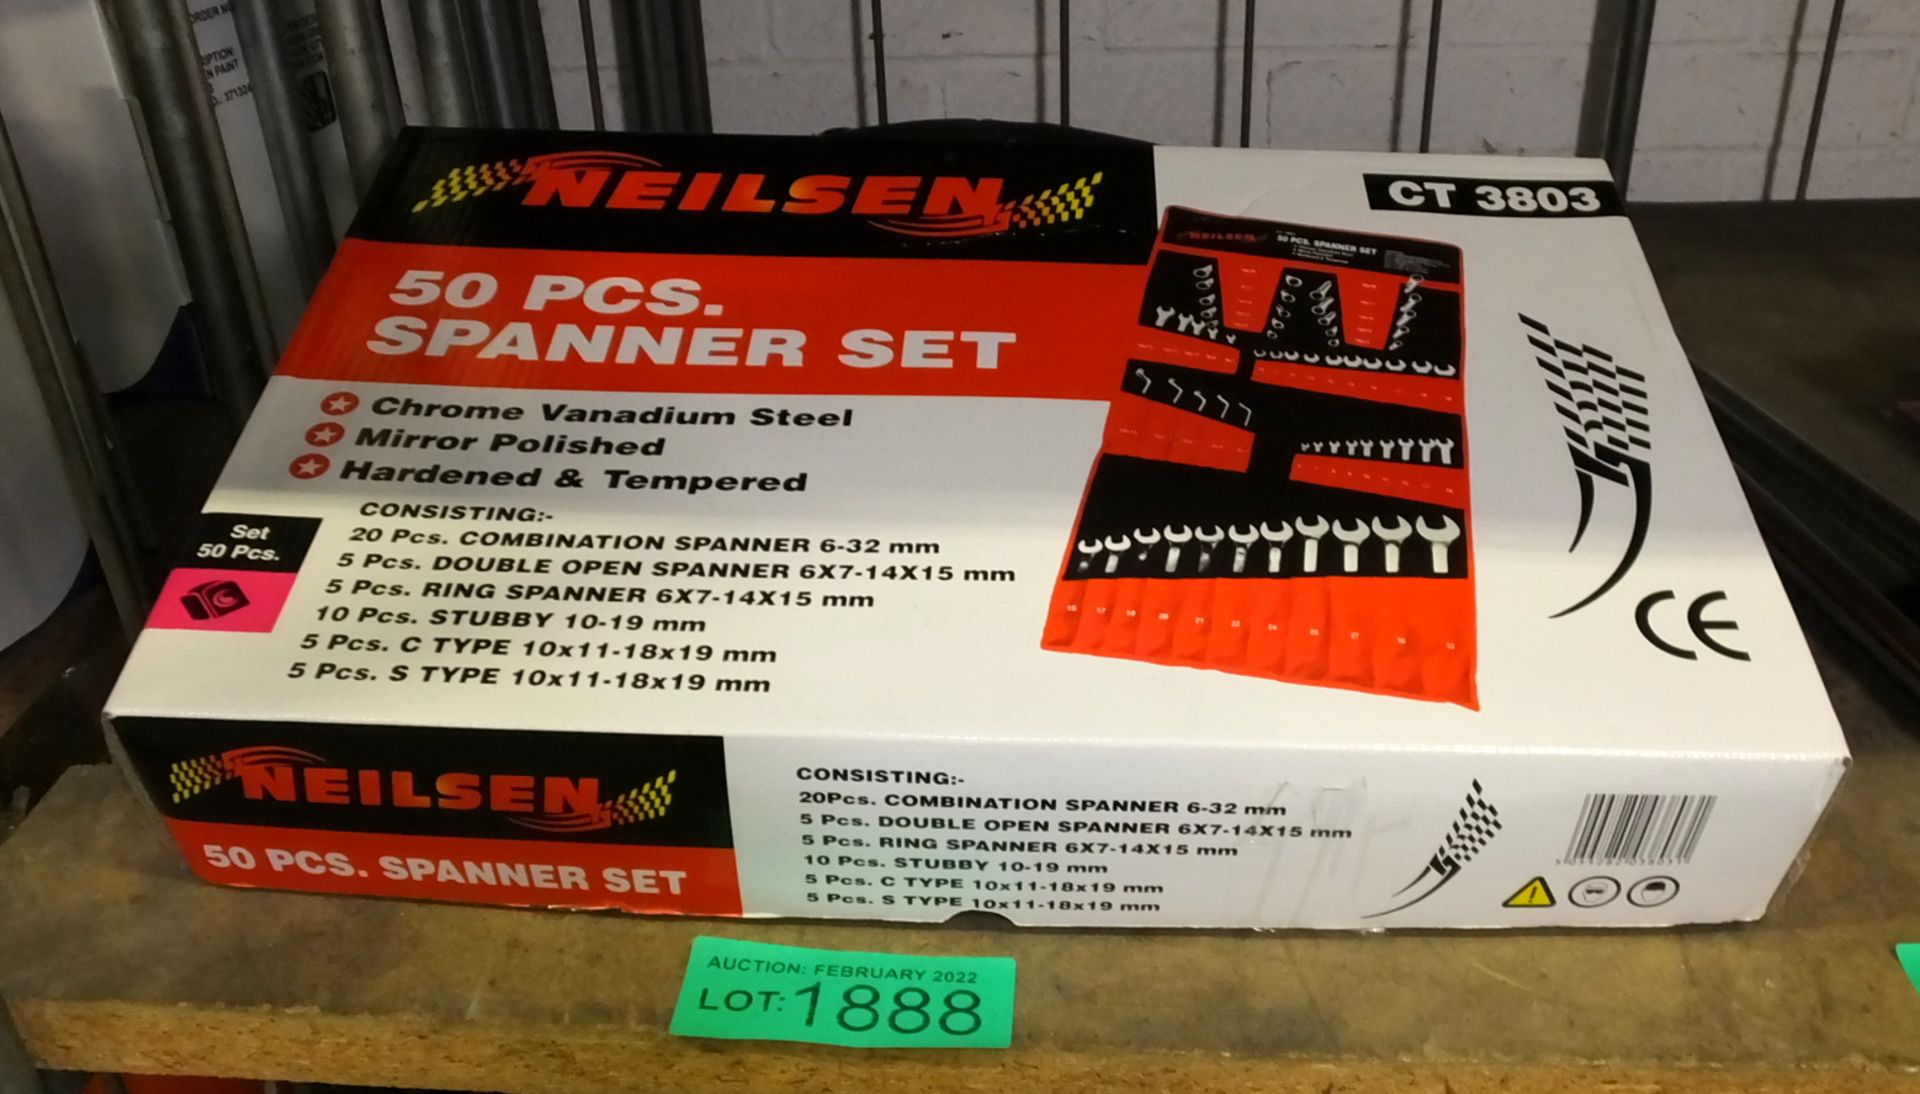 3x Neilsen 25 piece combination spanner sets